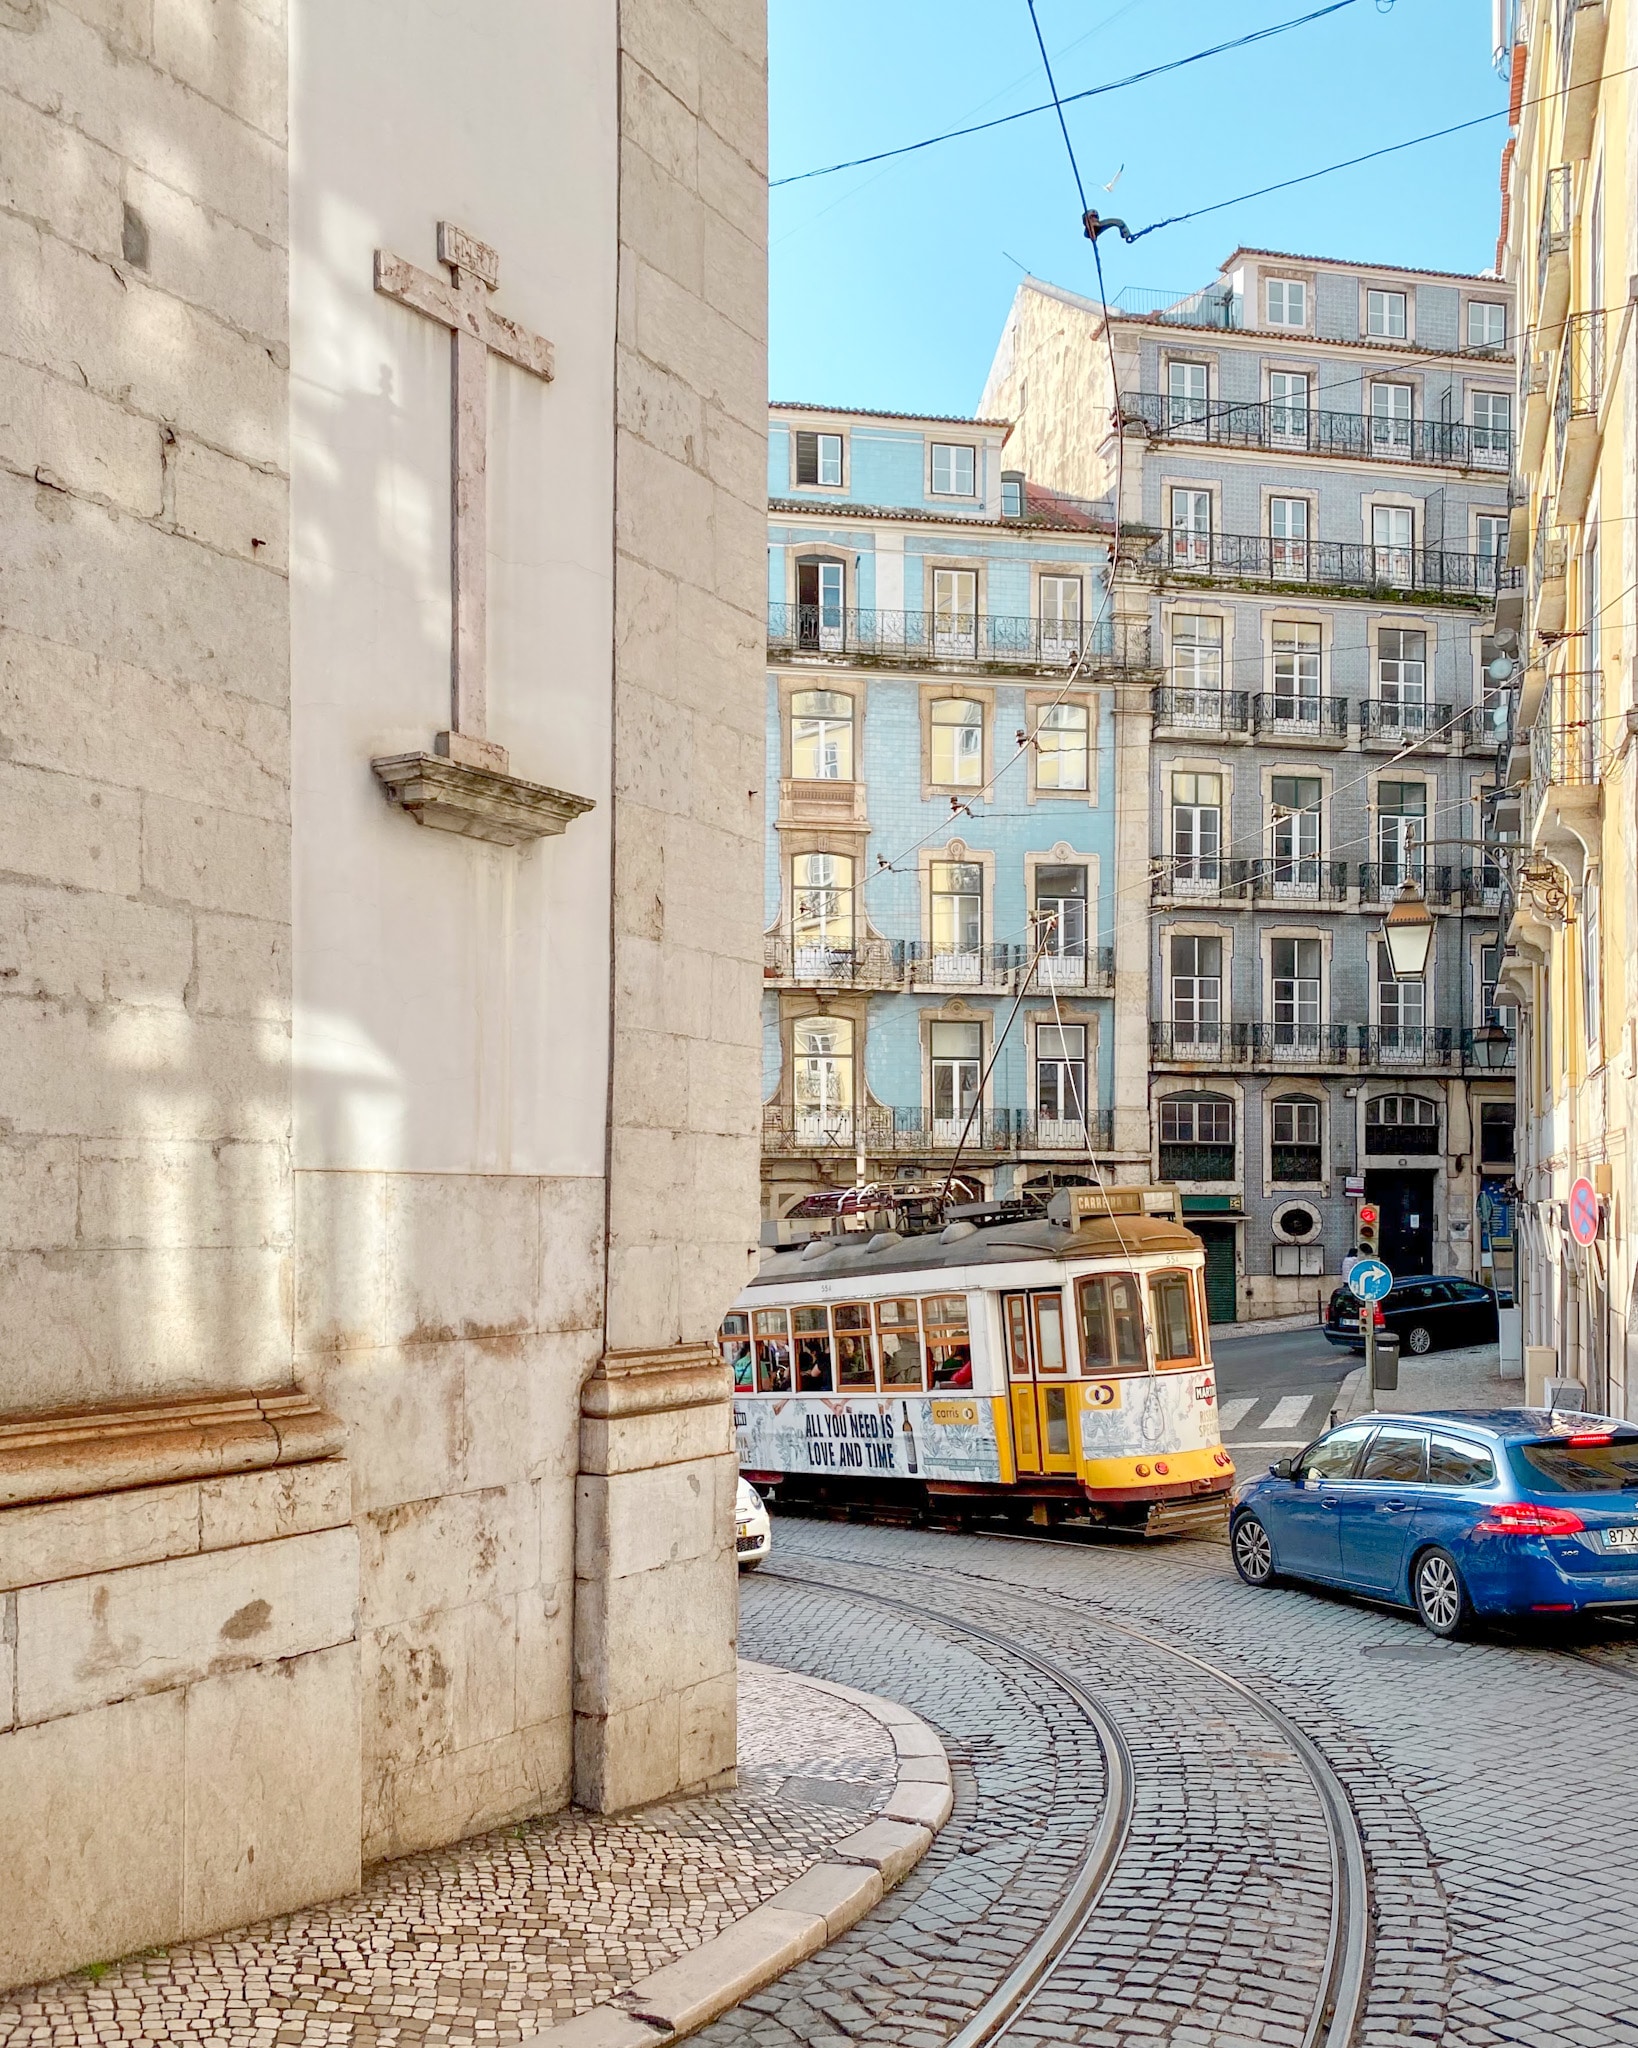 Tram 28 on winding streets in Lisbon, Portugal.